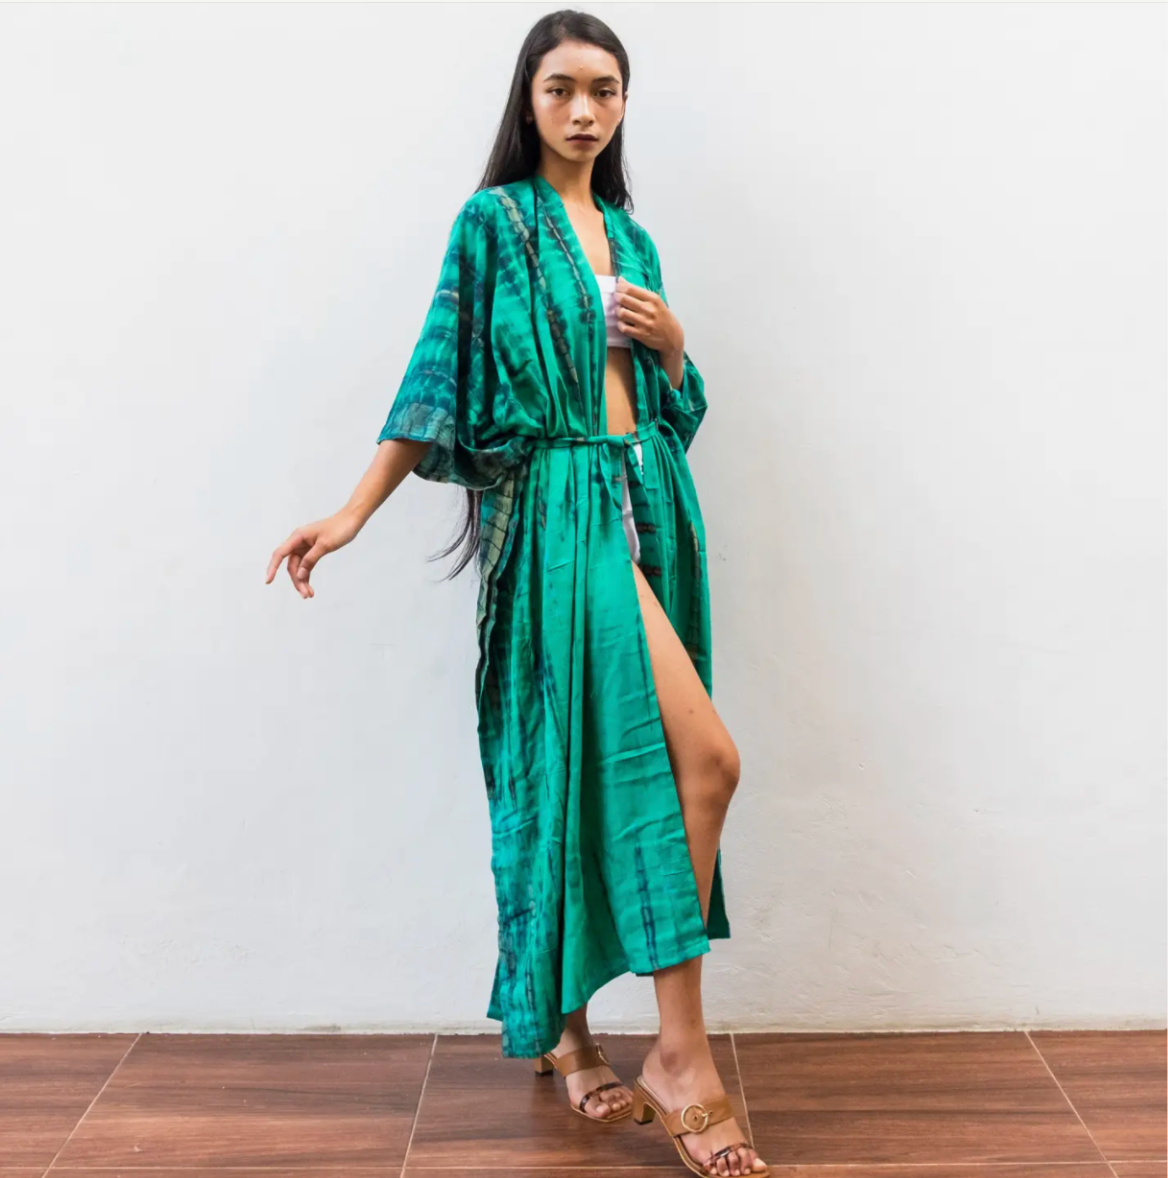 BALI HARVEST - Tie Dye Kimono Cover Up (Green) - Bikini Beach Robe Dress